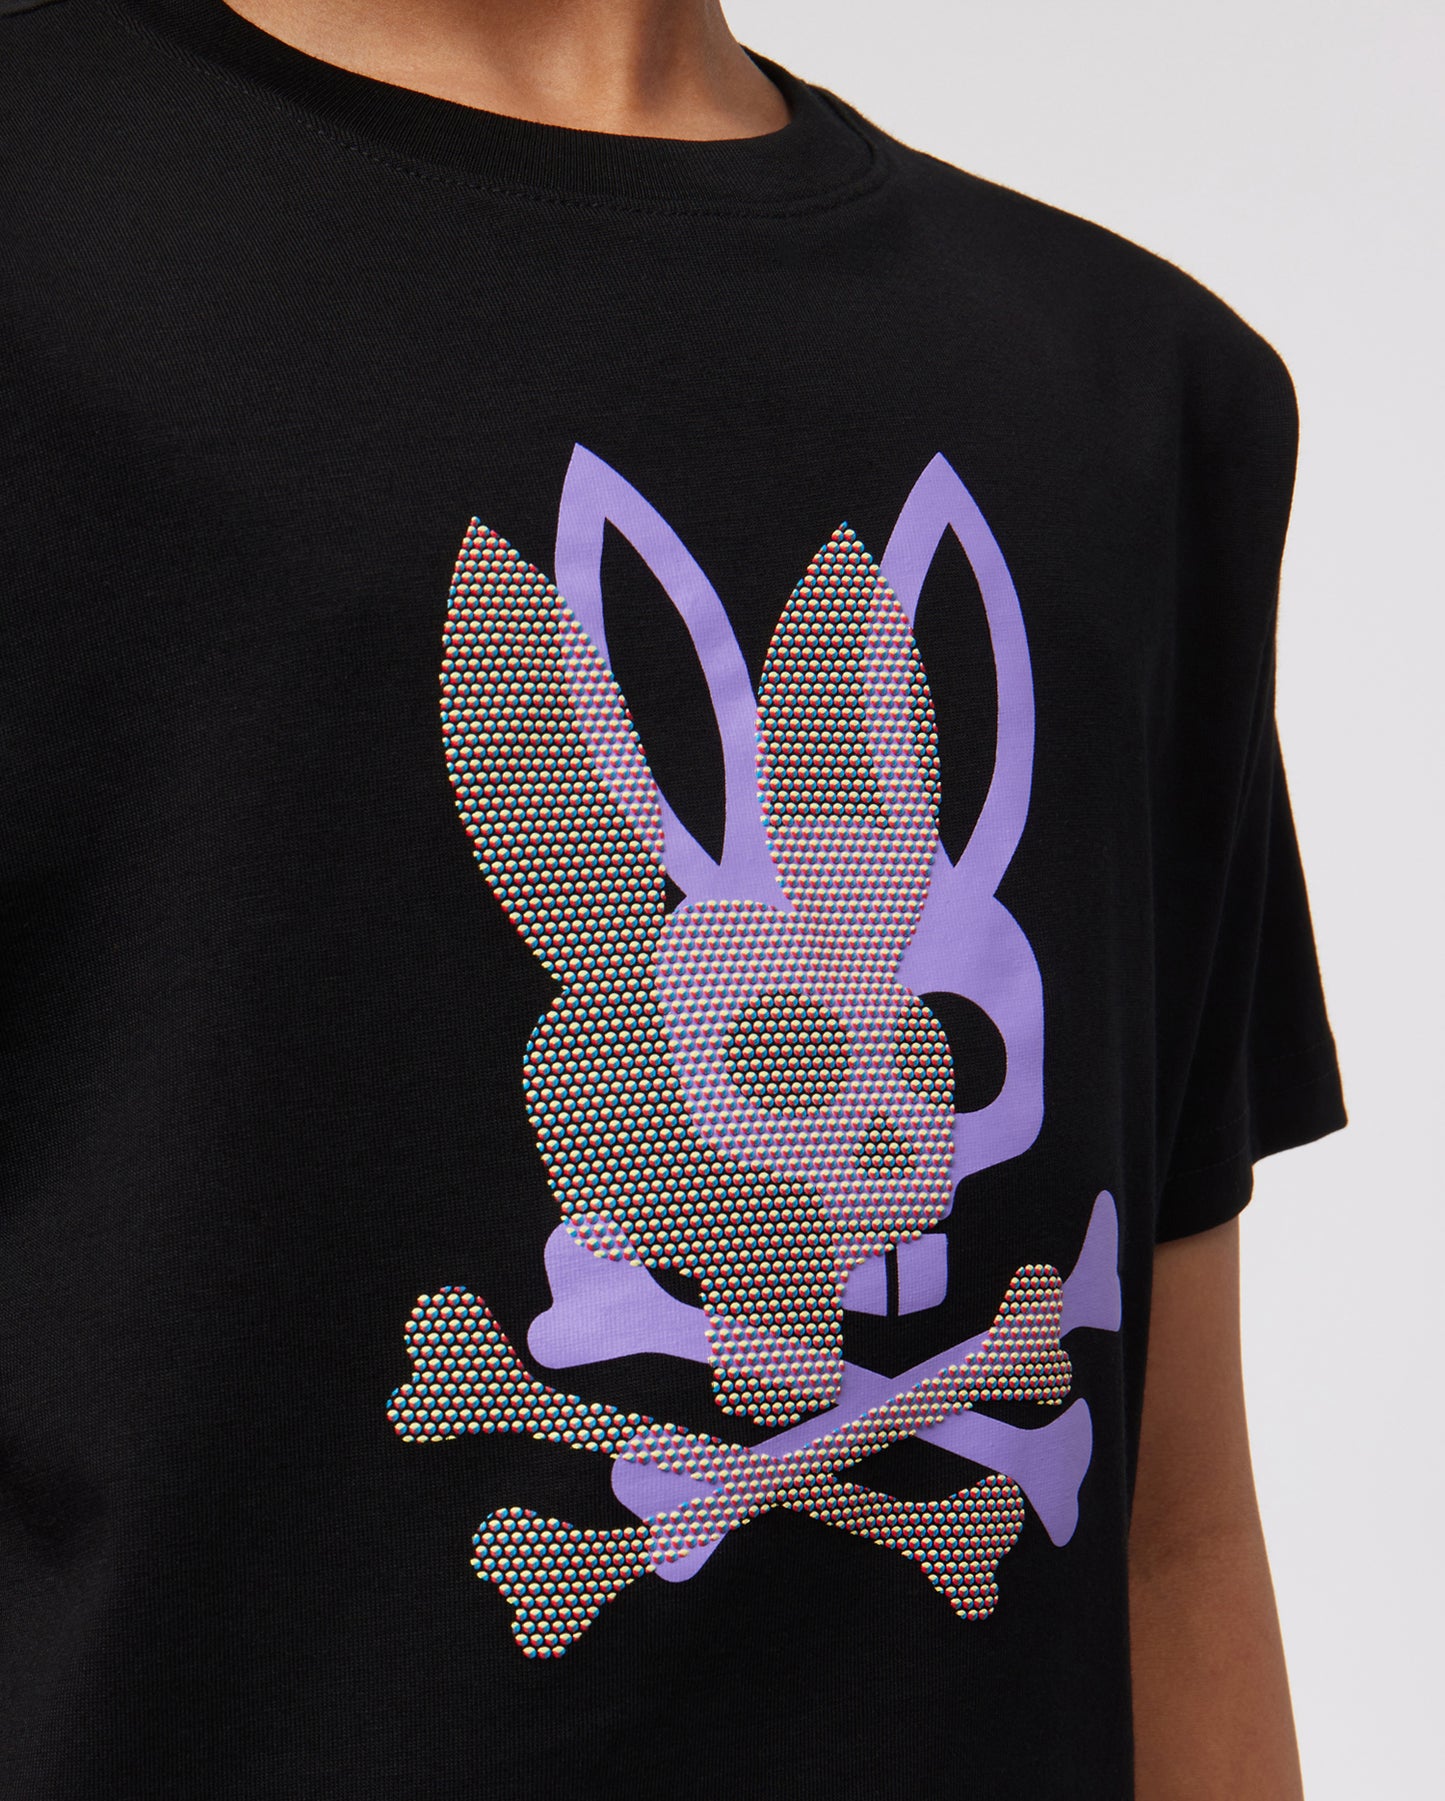 Rabbit Bugs Bunny Louis Vuitton T-shirt For Men And Women